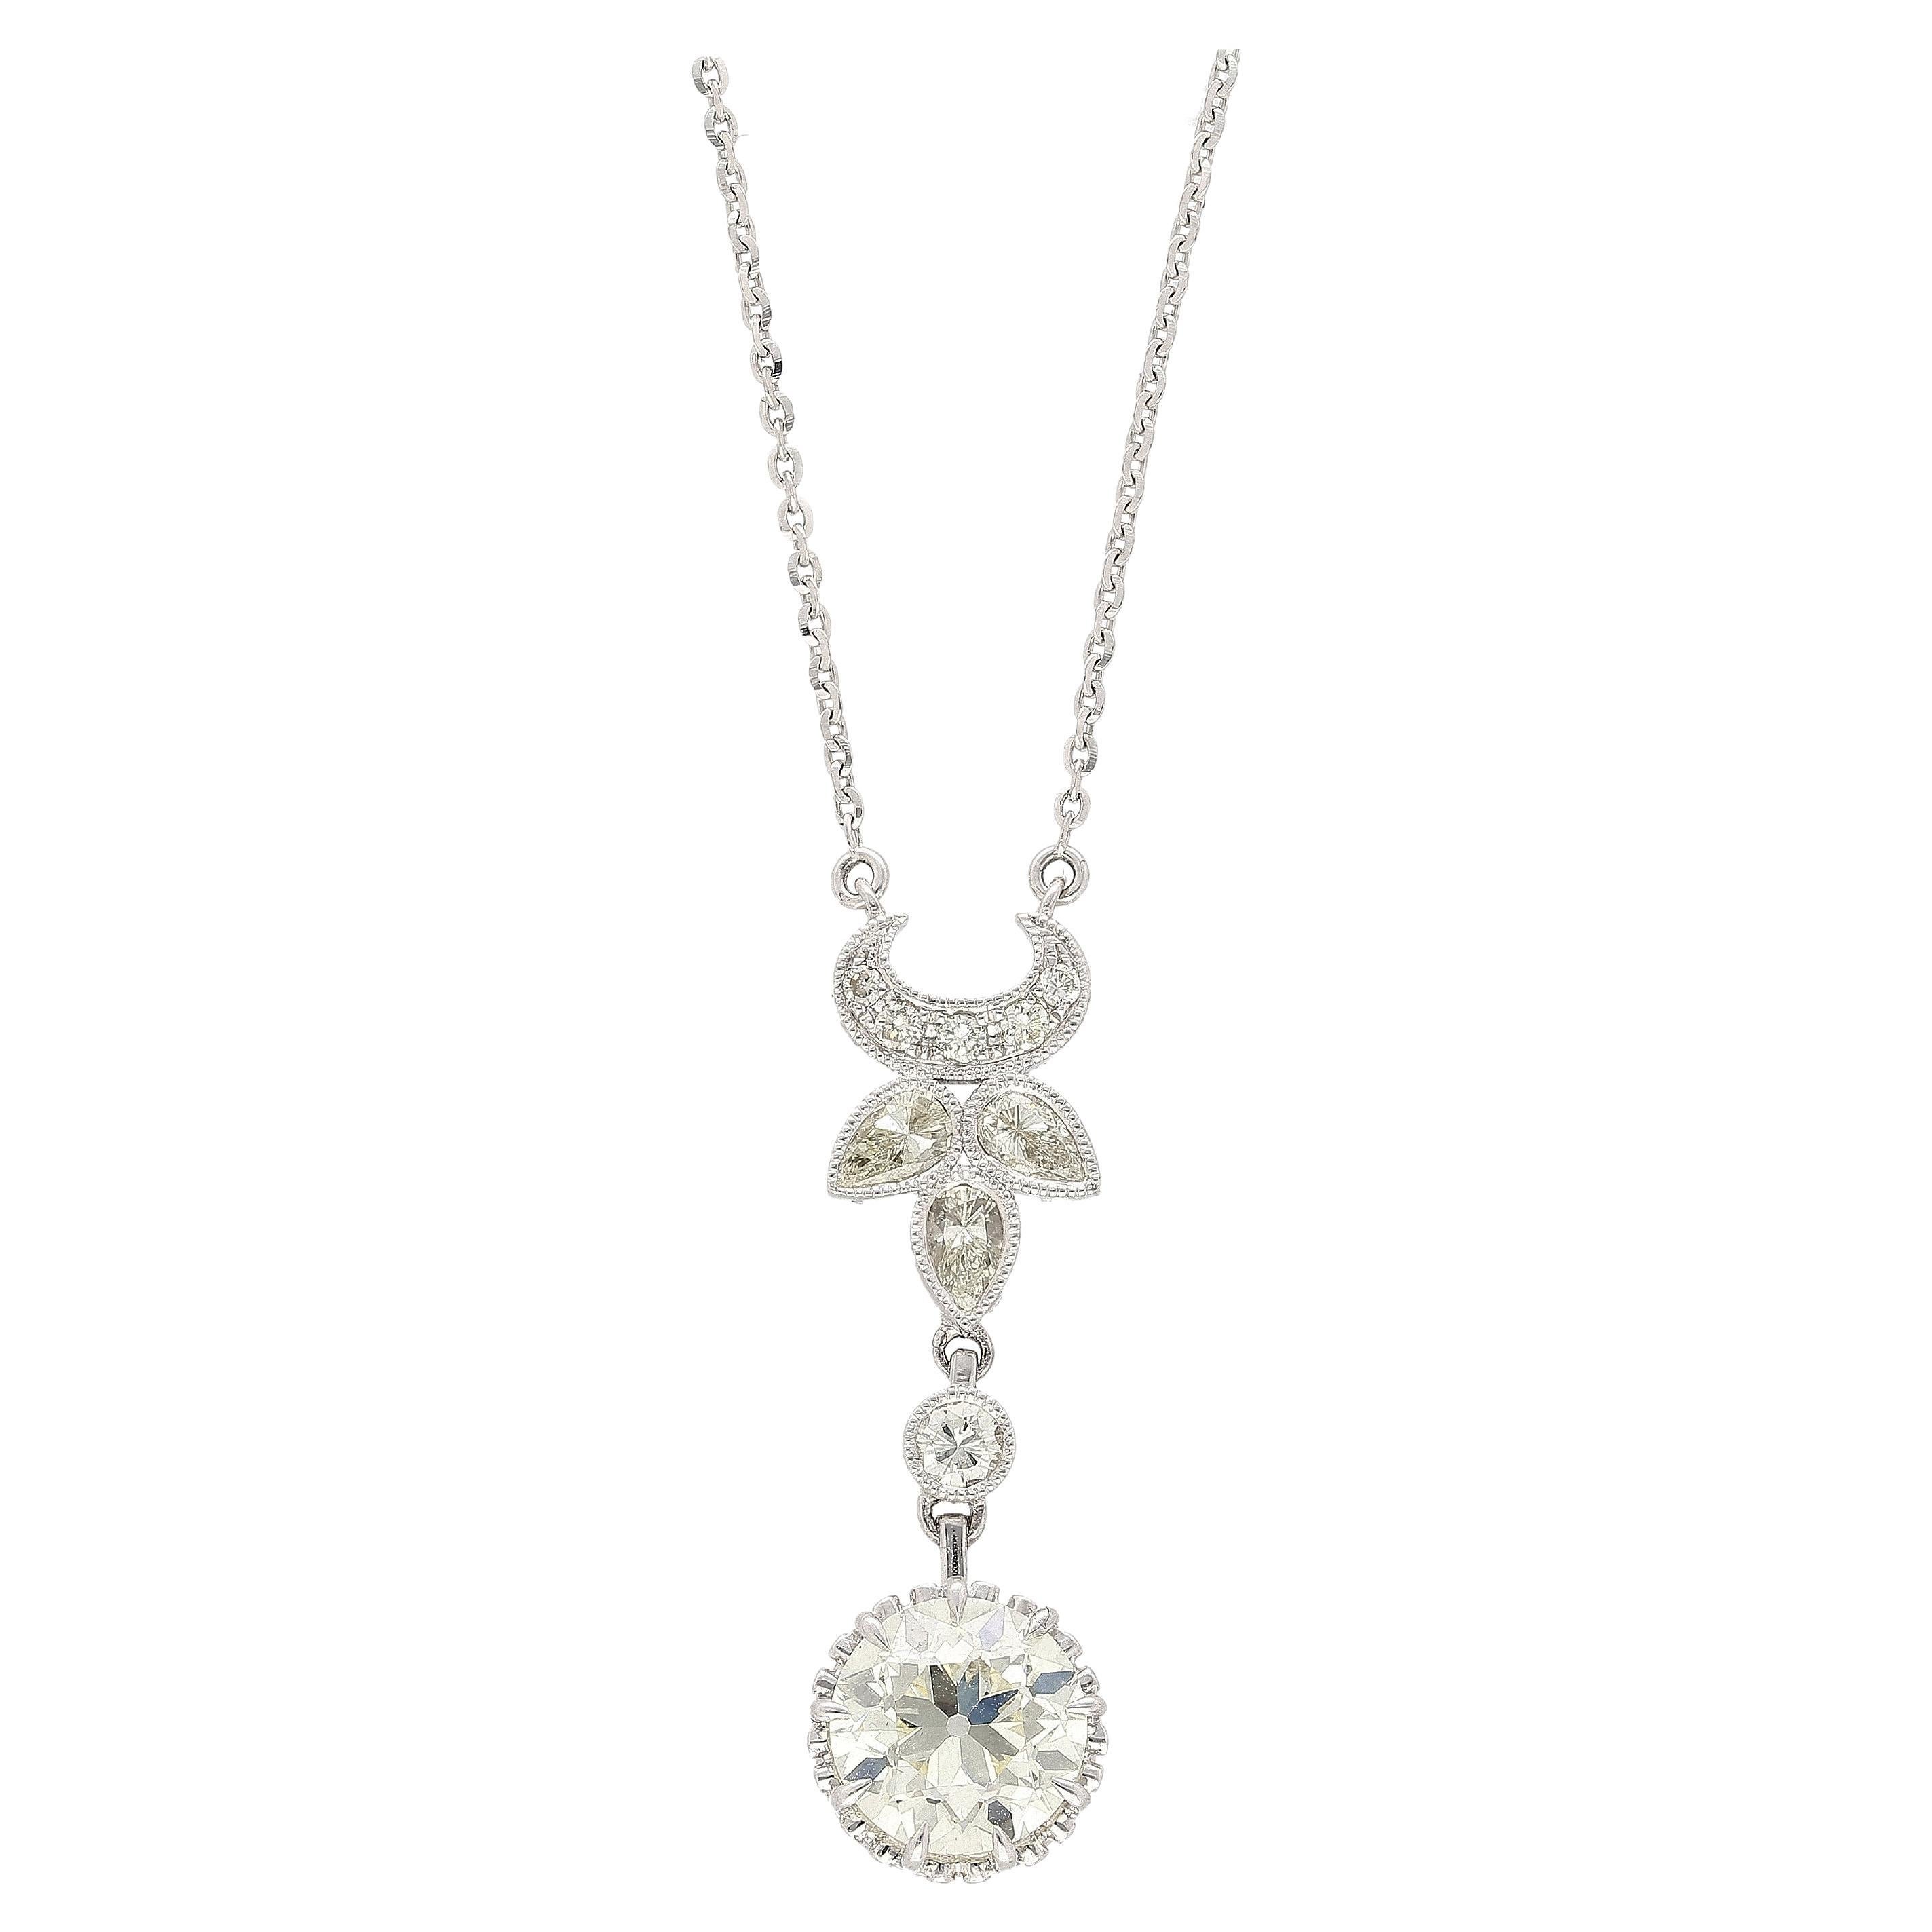 2.60 Carat Old European Cut Diamond Antique Style Pendant Drop Necklace